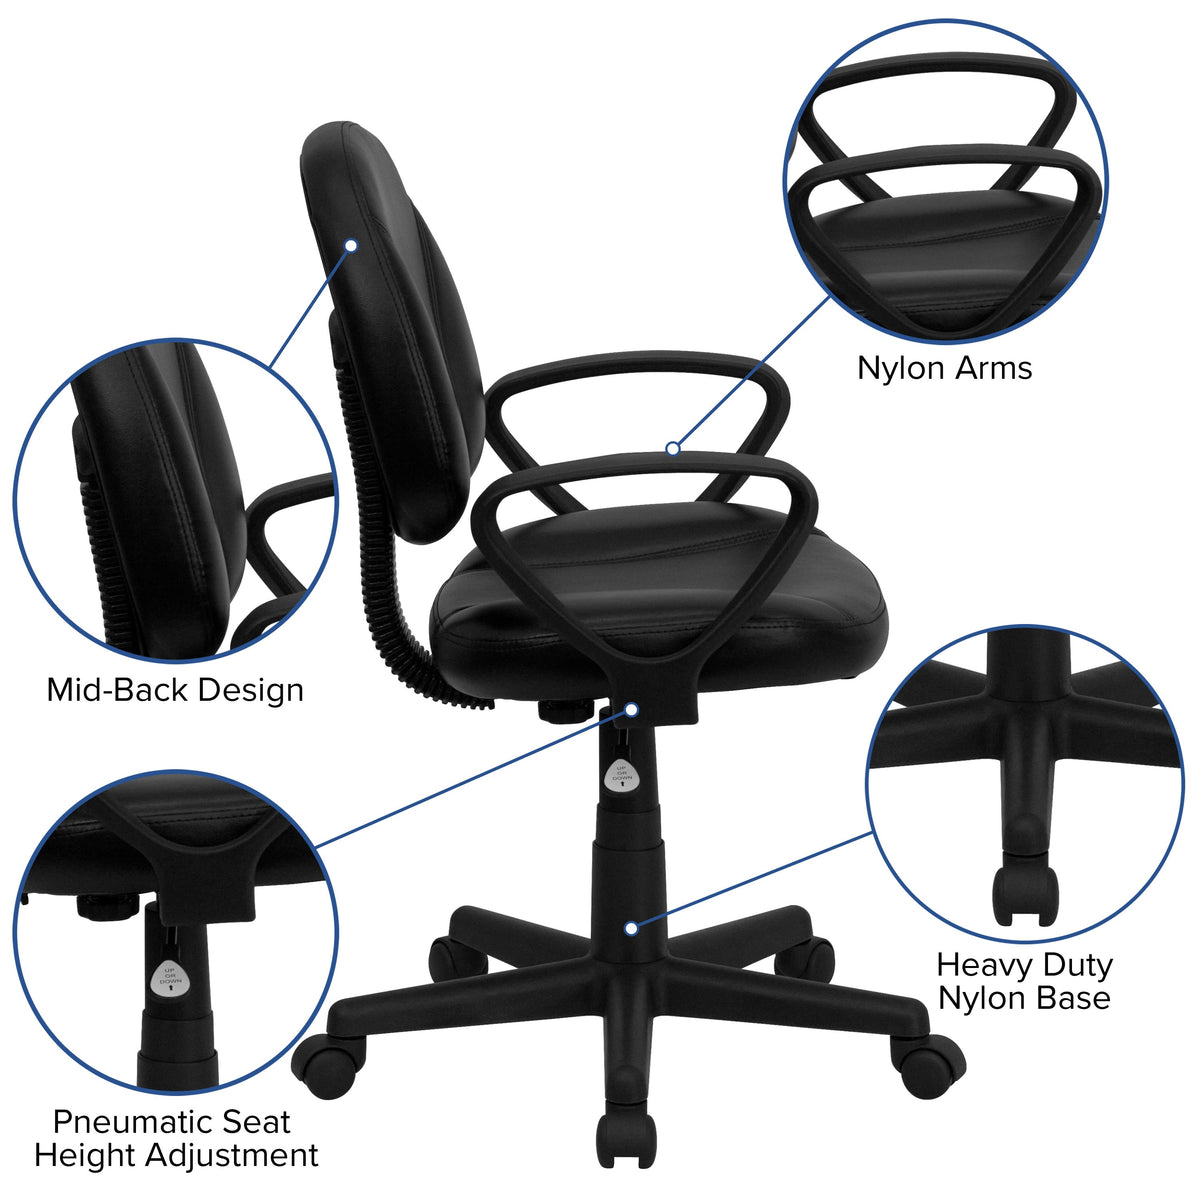 Mid-Back Black LeatherSoft Swivel Ergonomic Task Office Adjustable Chair w/ Arms